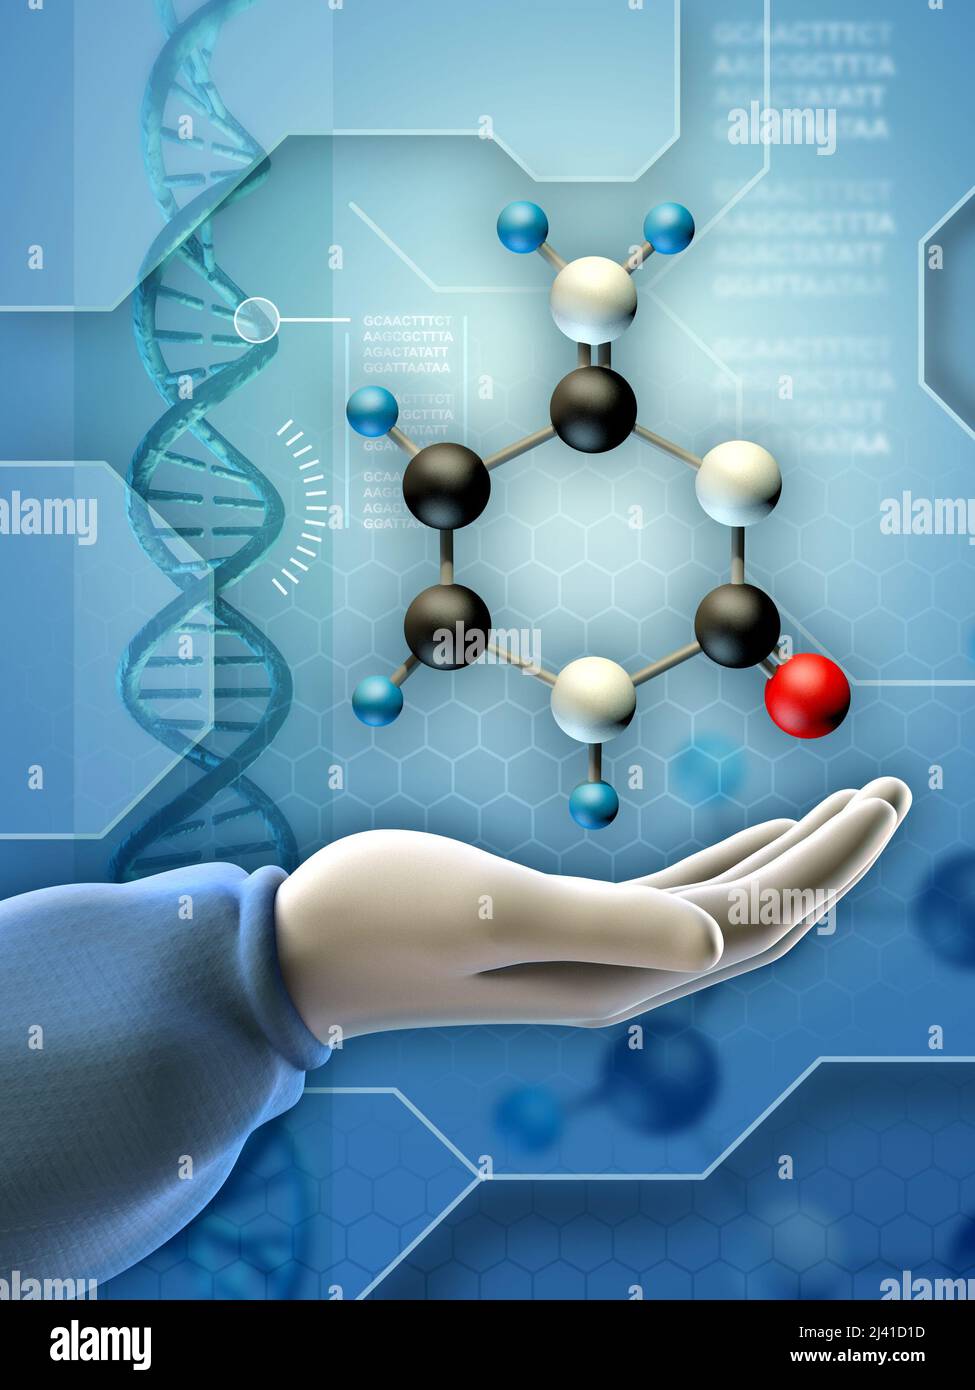 Cytosine molecule and dna composition. Digital illustration. Stock Photo